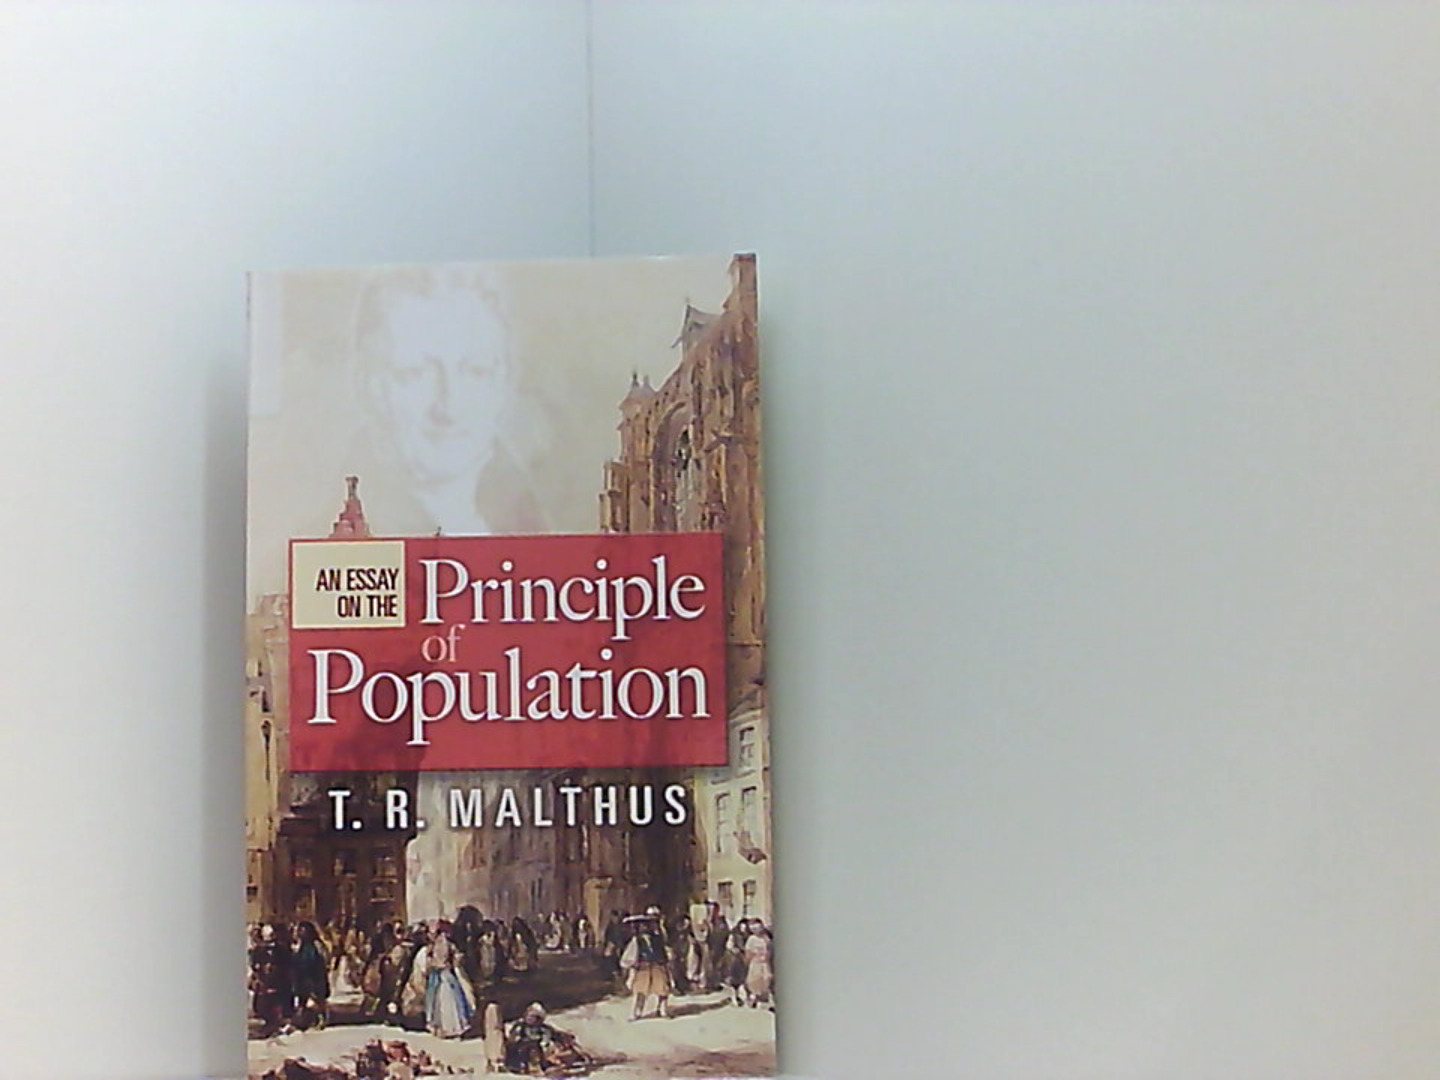 ESSAY ON THE PRINCIPLE OF POPU - Malthus T., R.